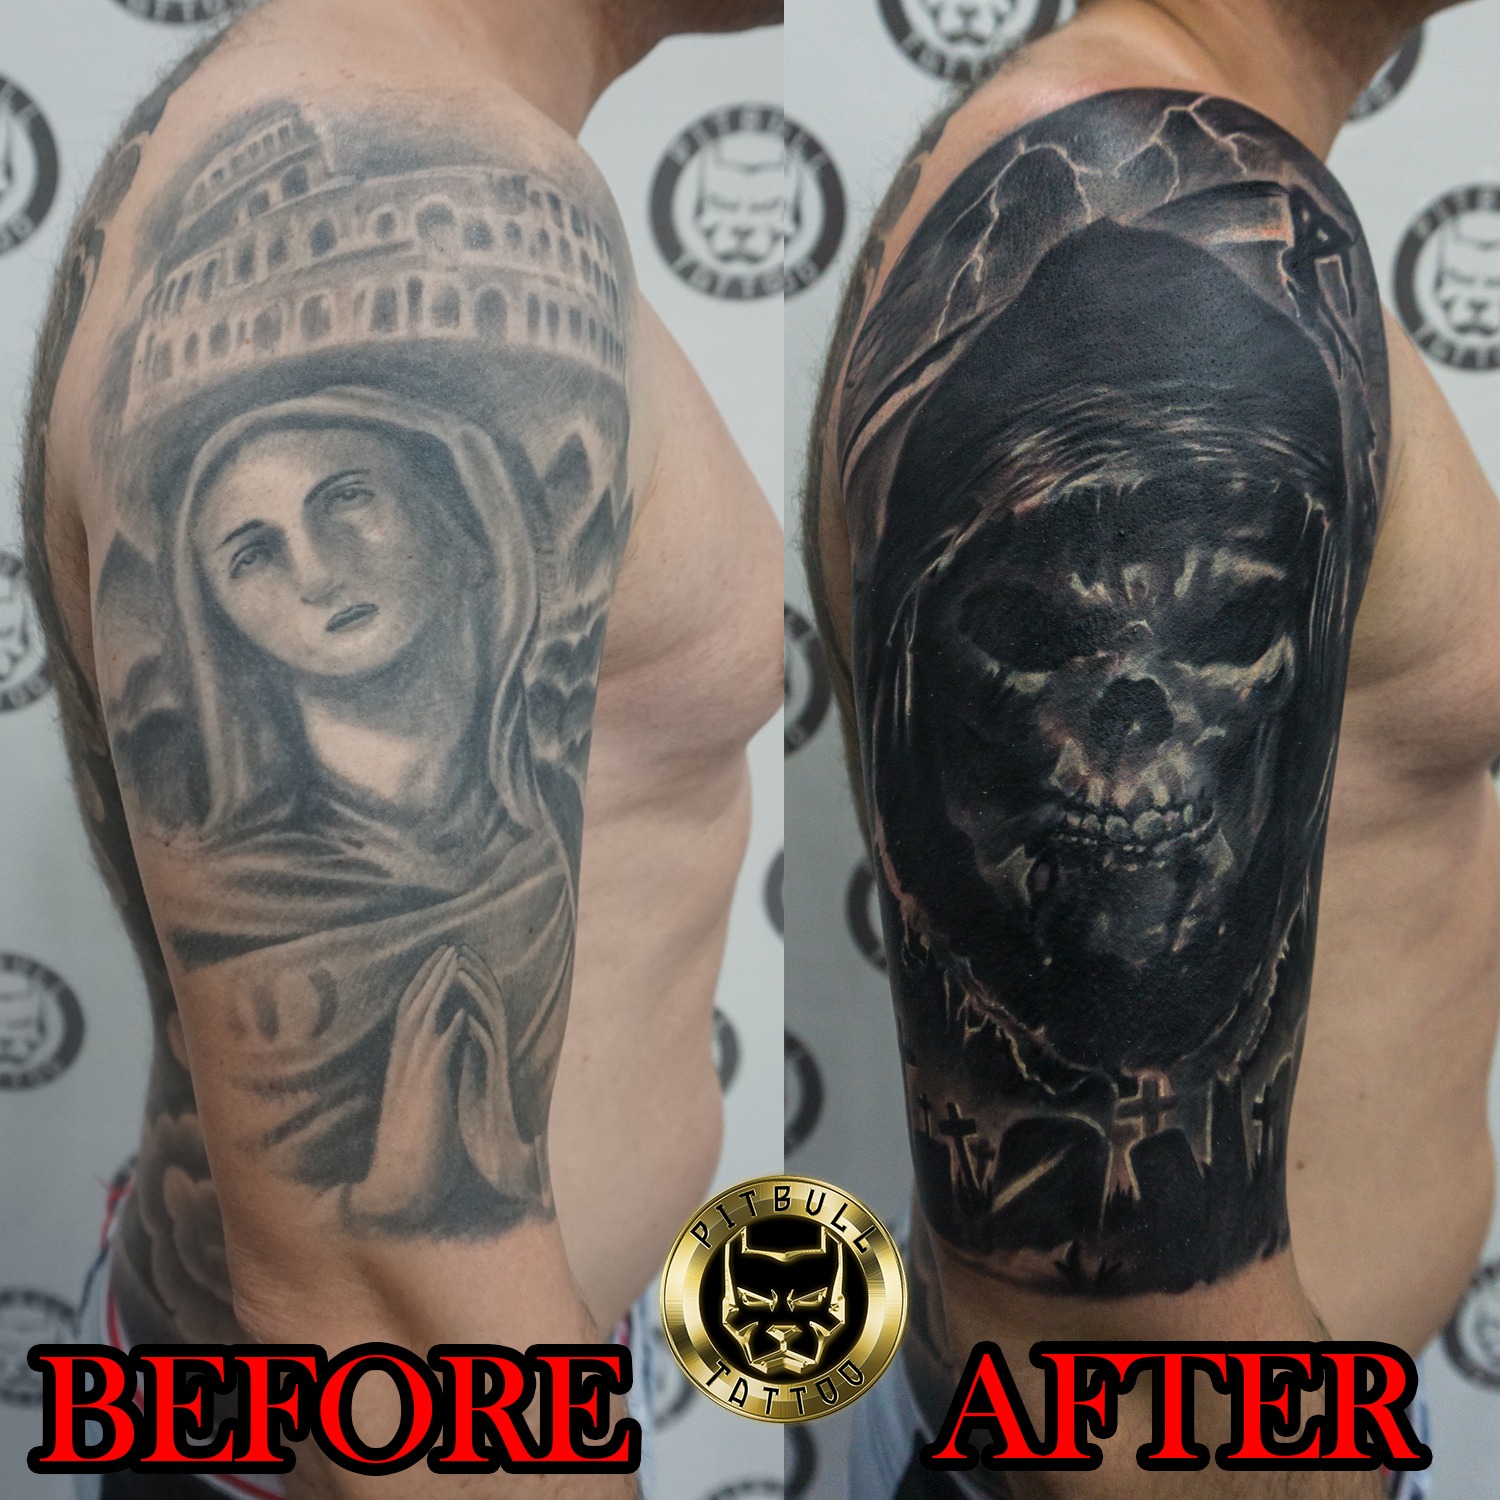 Cover up Indian Skull Tattoo Sharp Art Studios  Indian skull tattoos  Neck tattoo Cover up tattoos